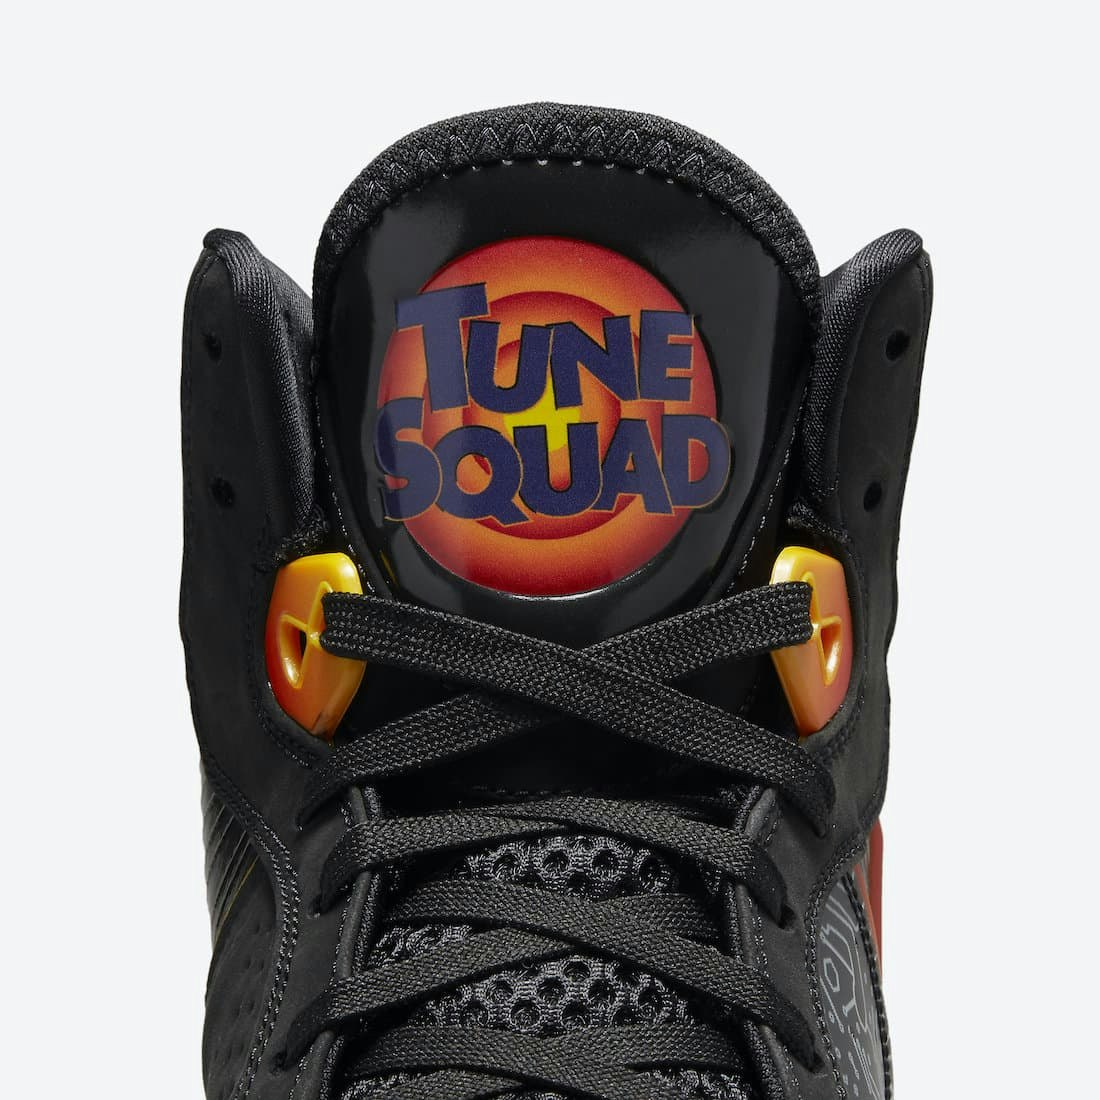 Space Jam x Nike LeBron 8 "Tune Squad"